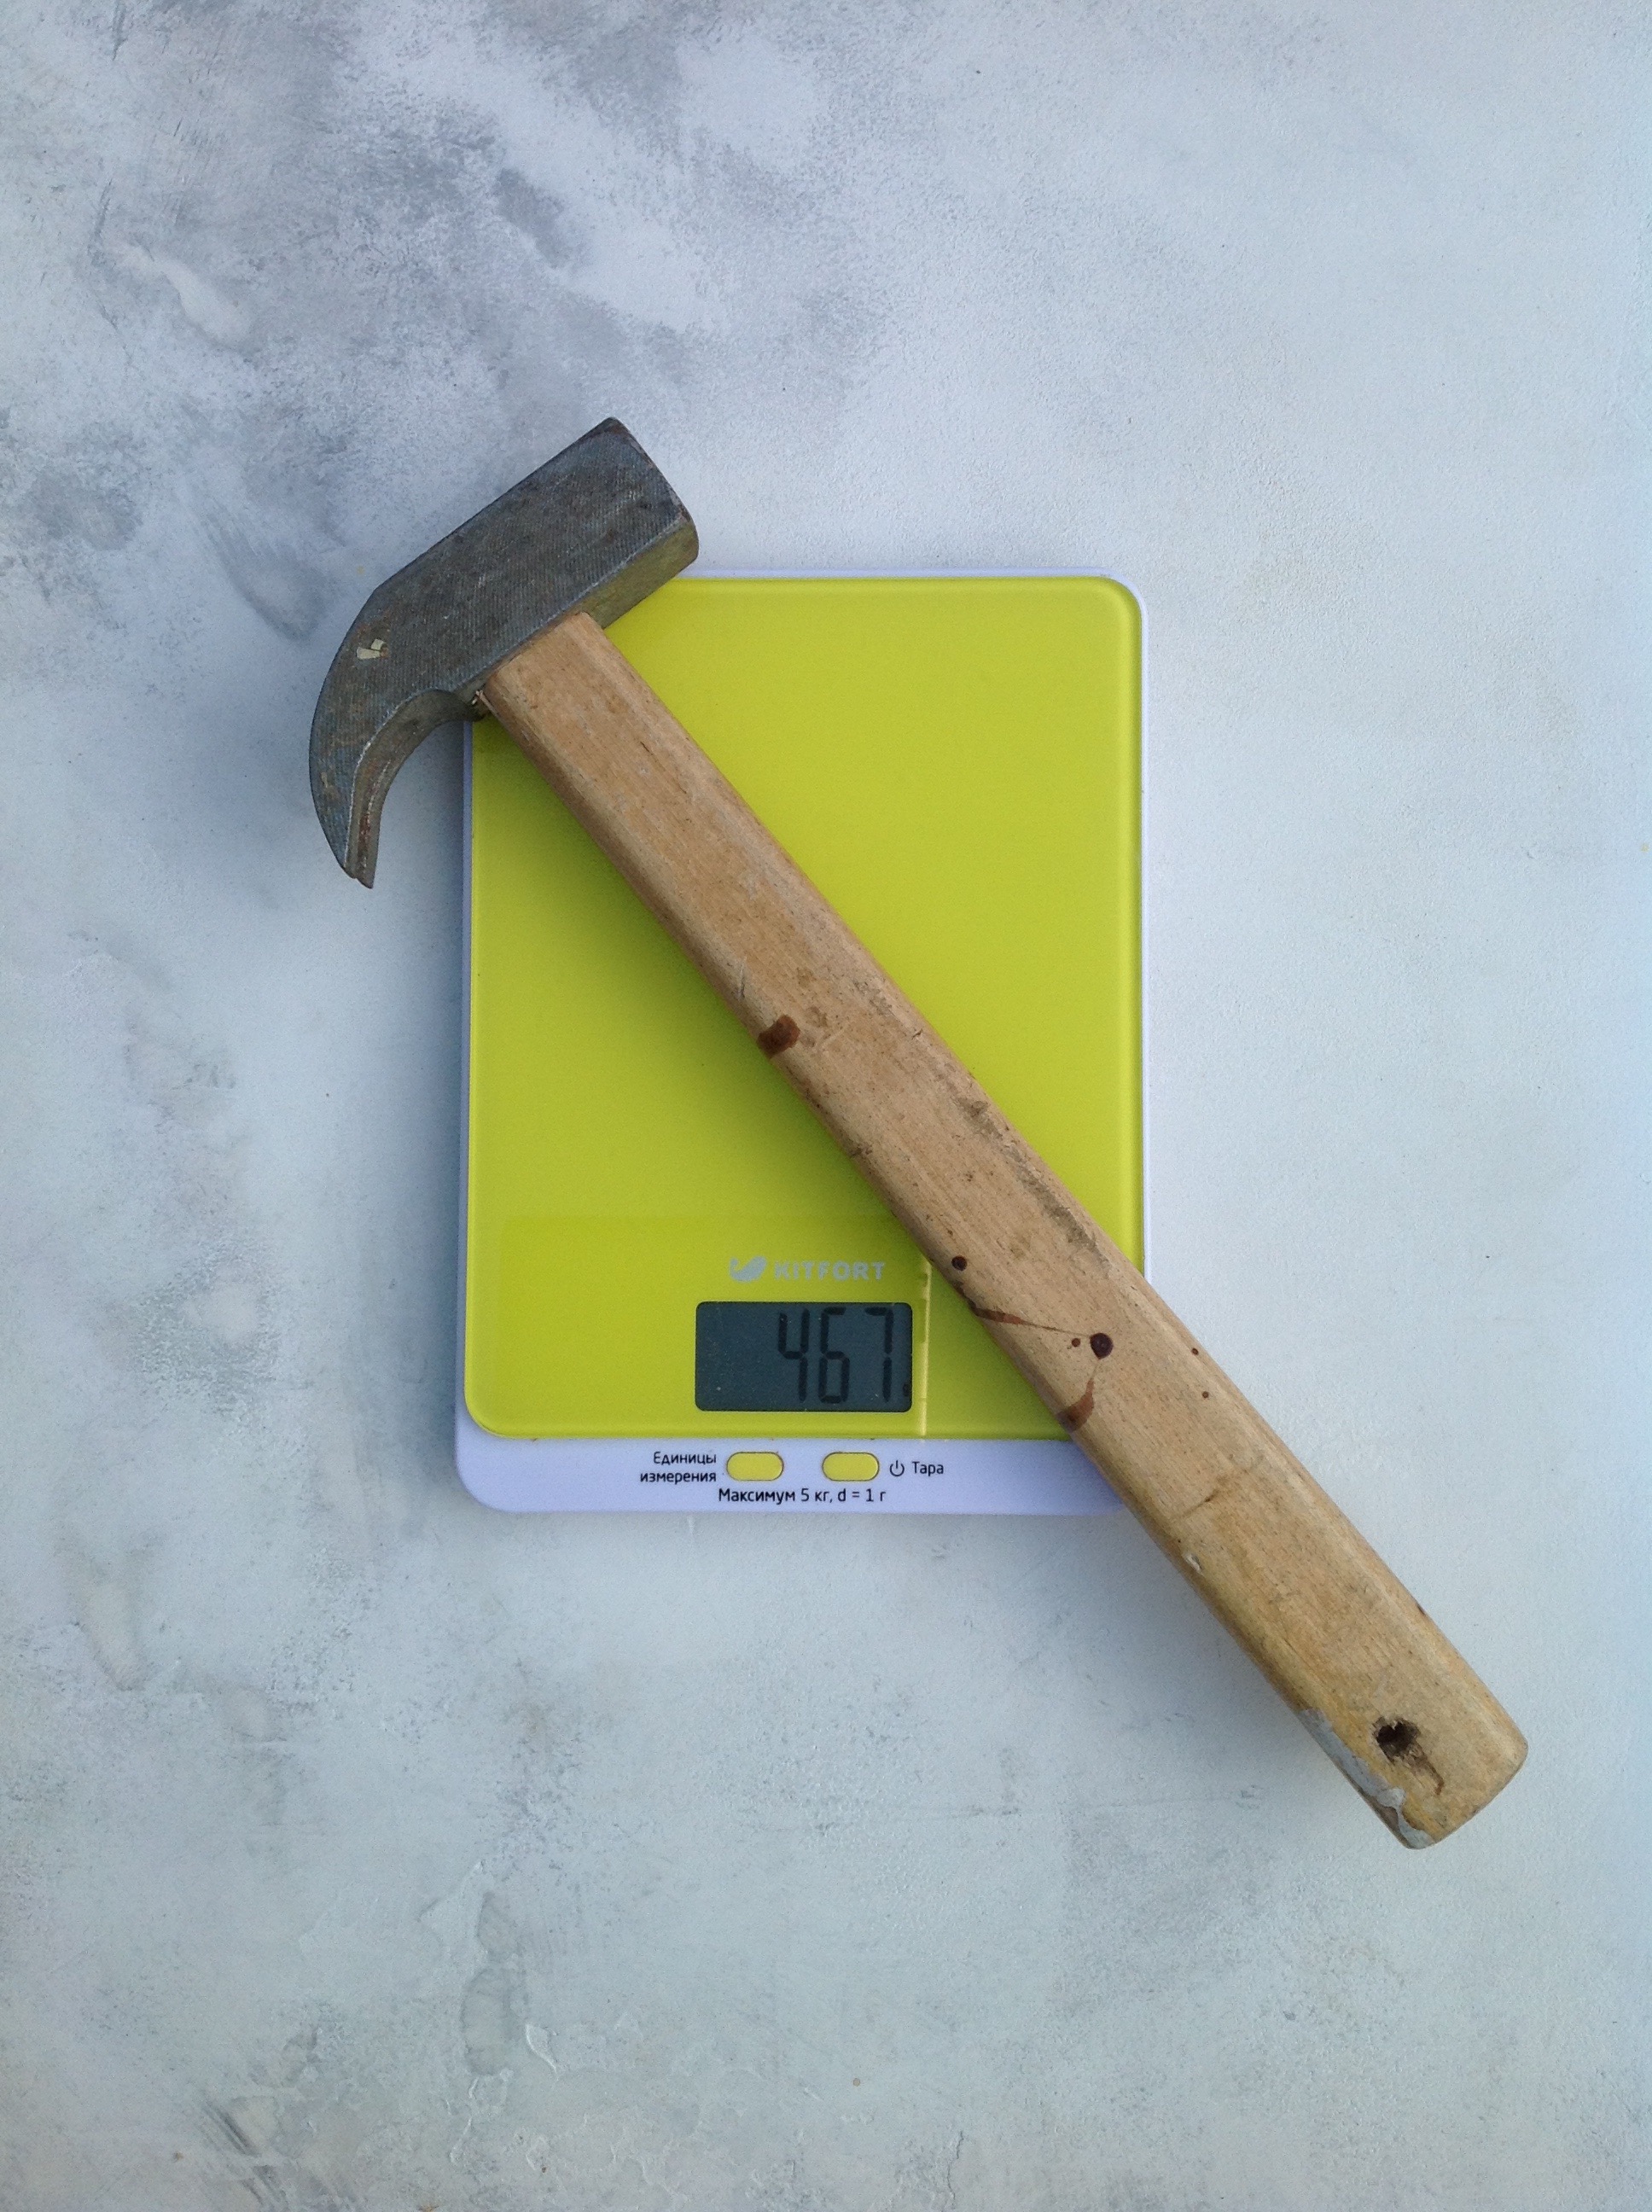 weight of hammer with nail gun